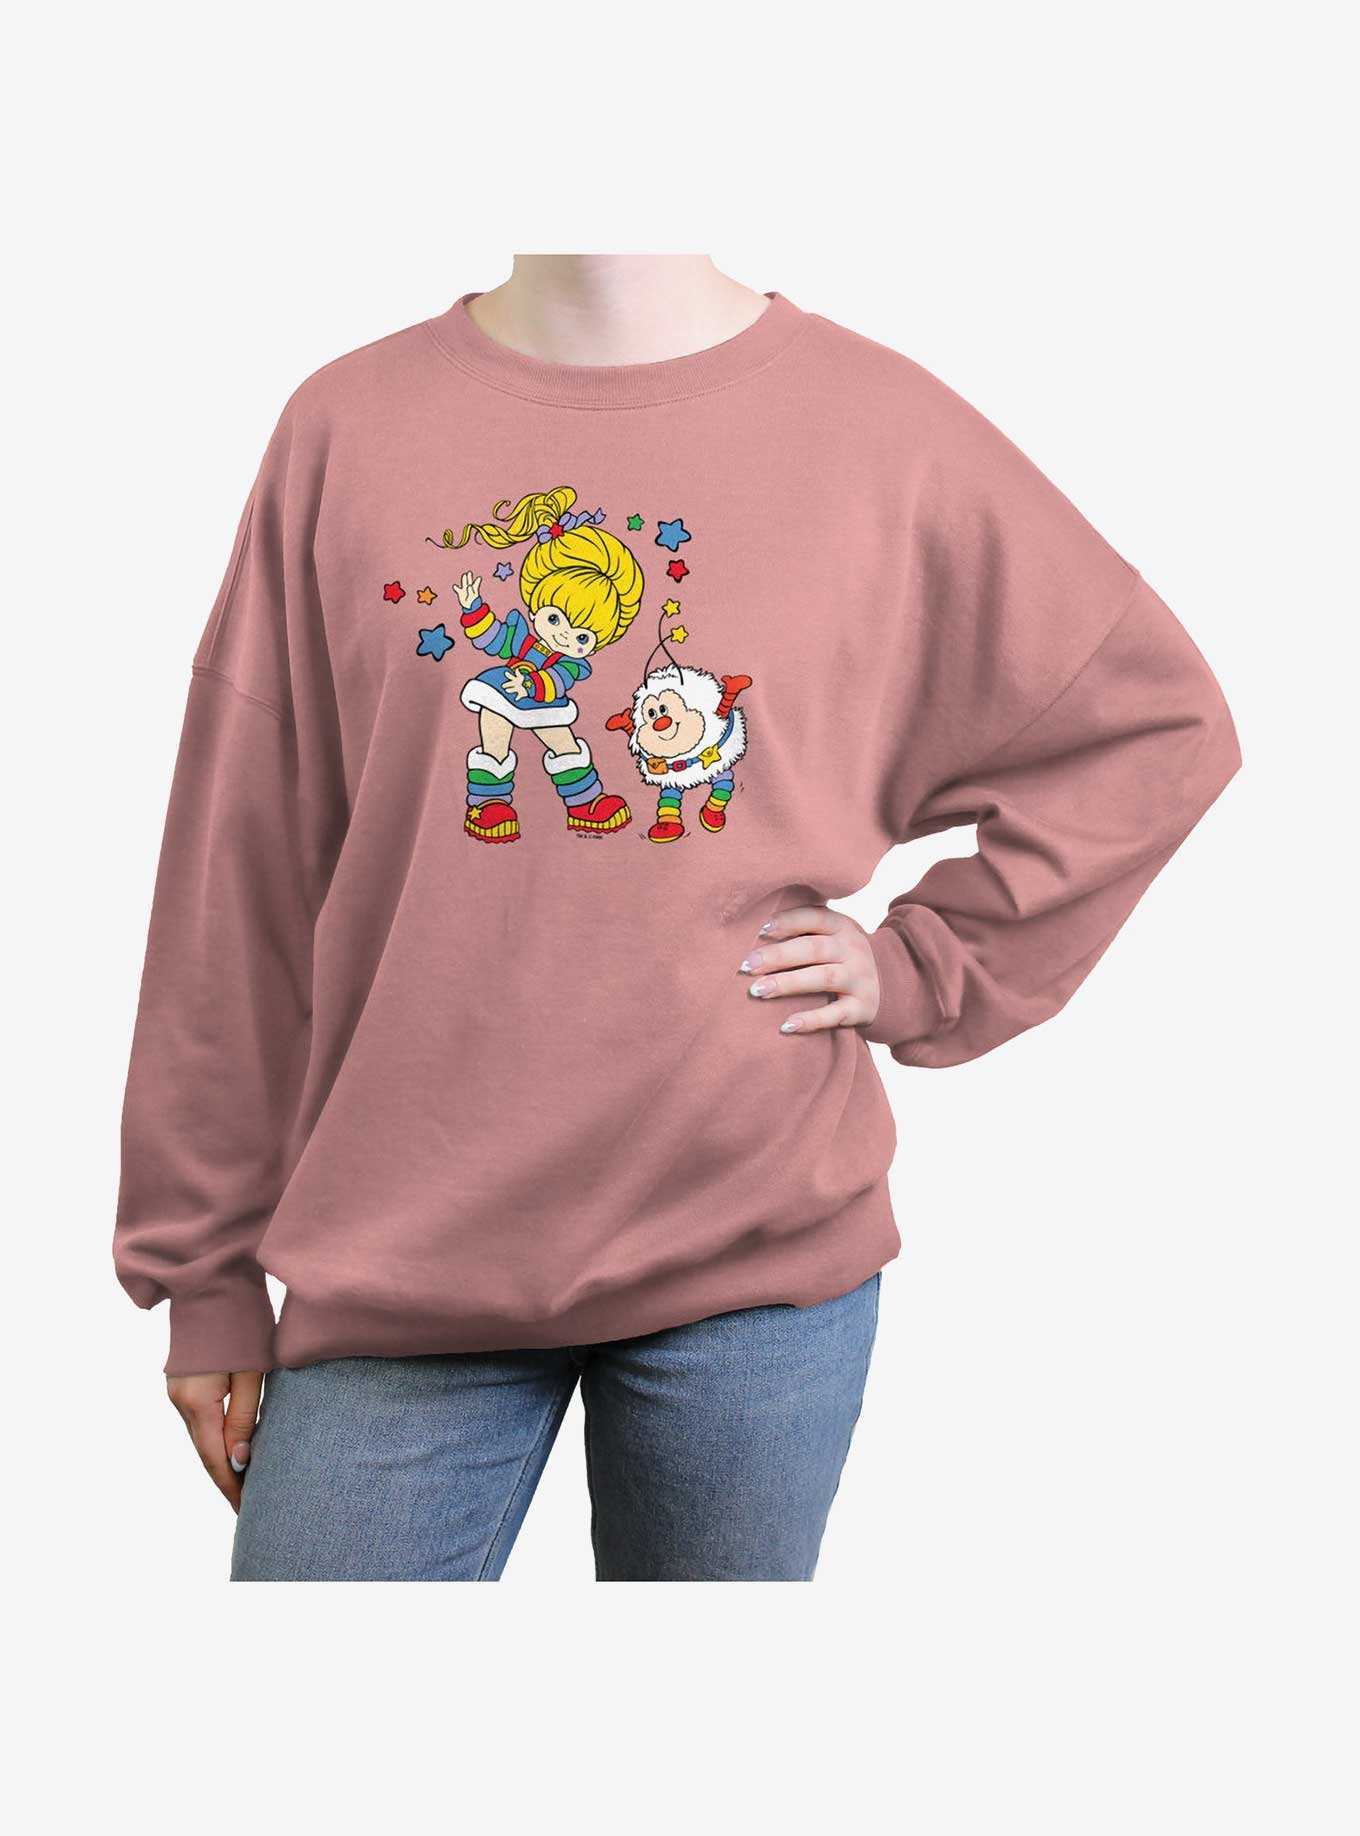 Rainbow Brite and Twink Girls Oversized Sweatshirt, , hi-res